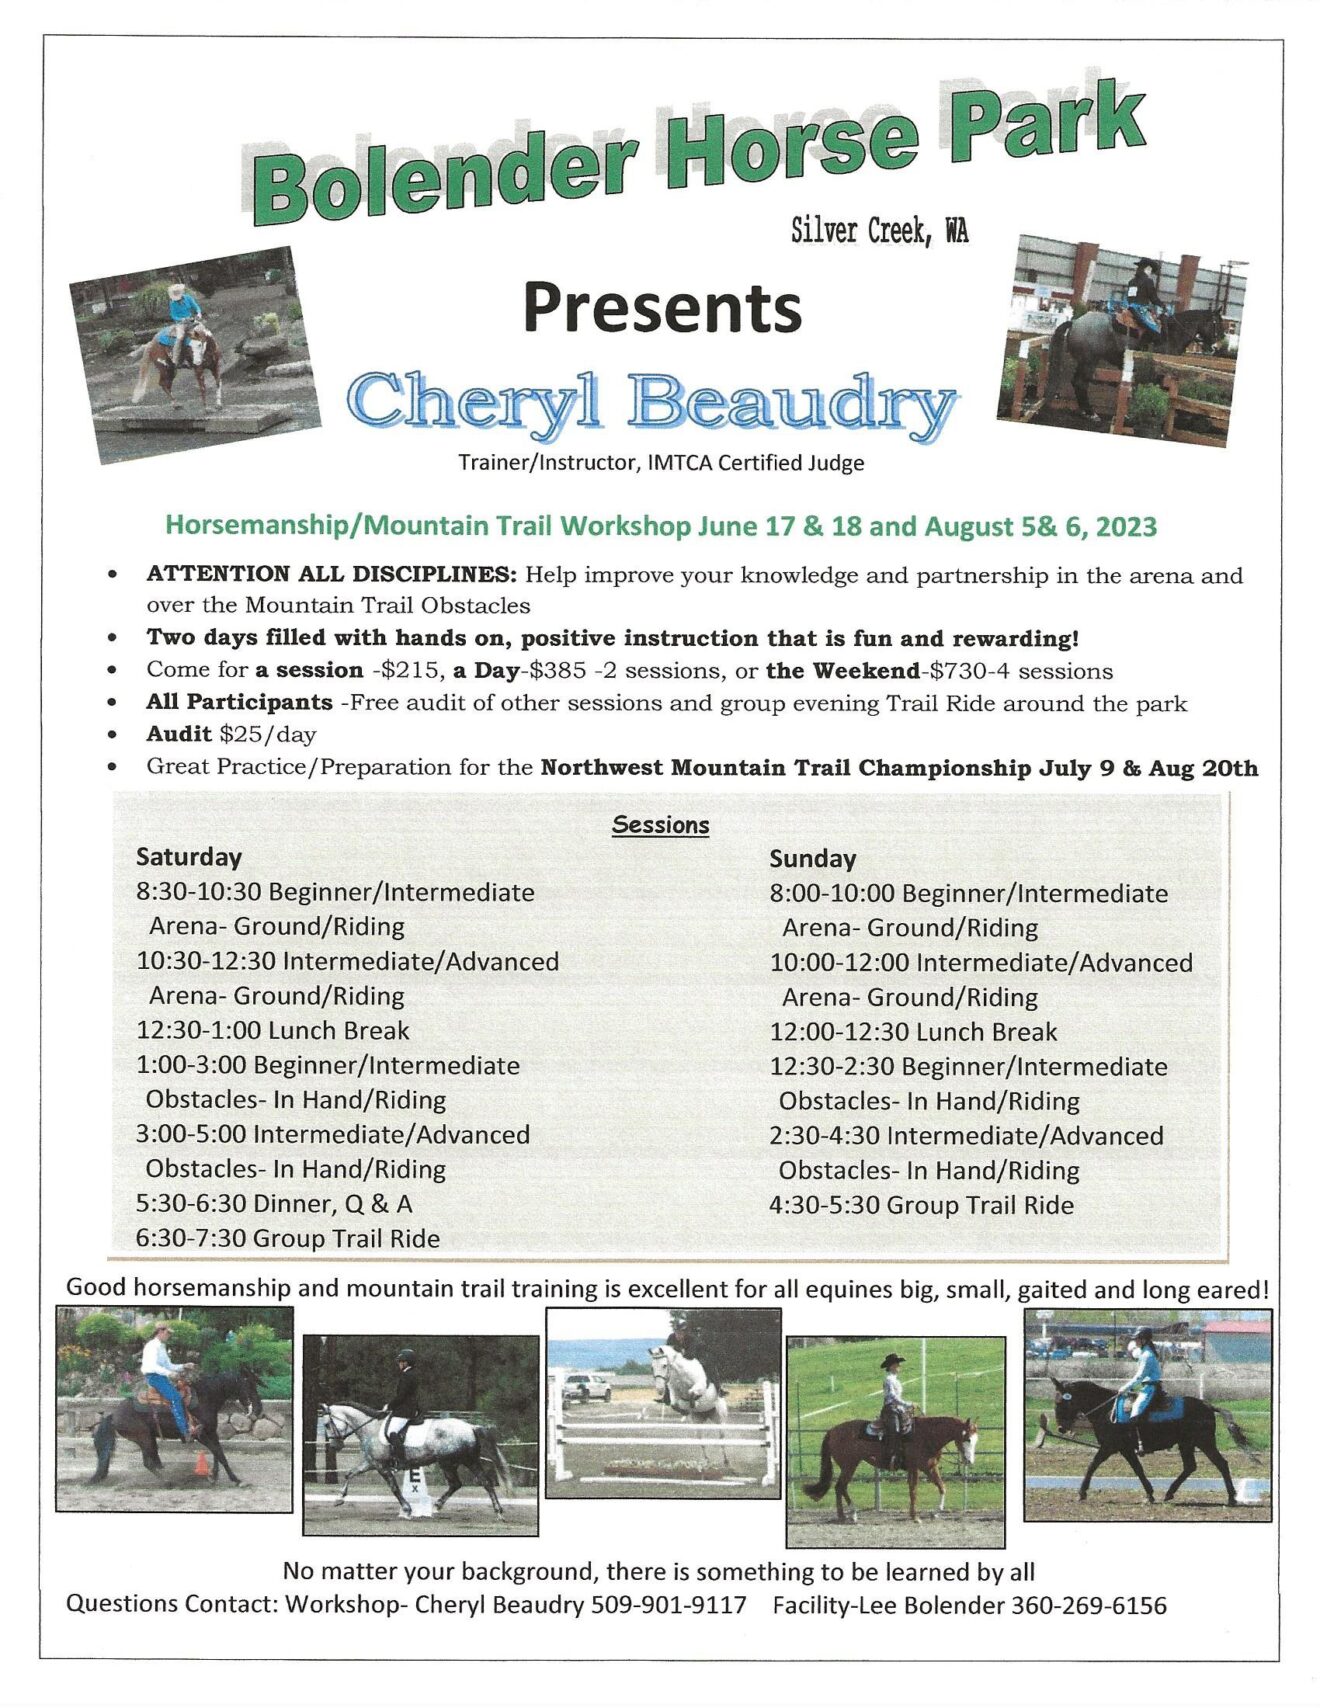 Cheryl Beaudry's Horsemanship/Mountain Trail Workshop